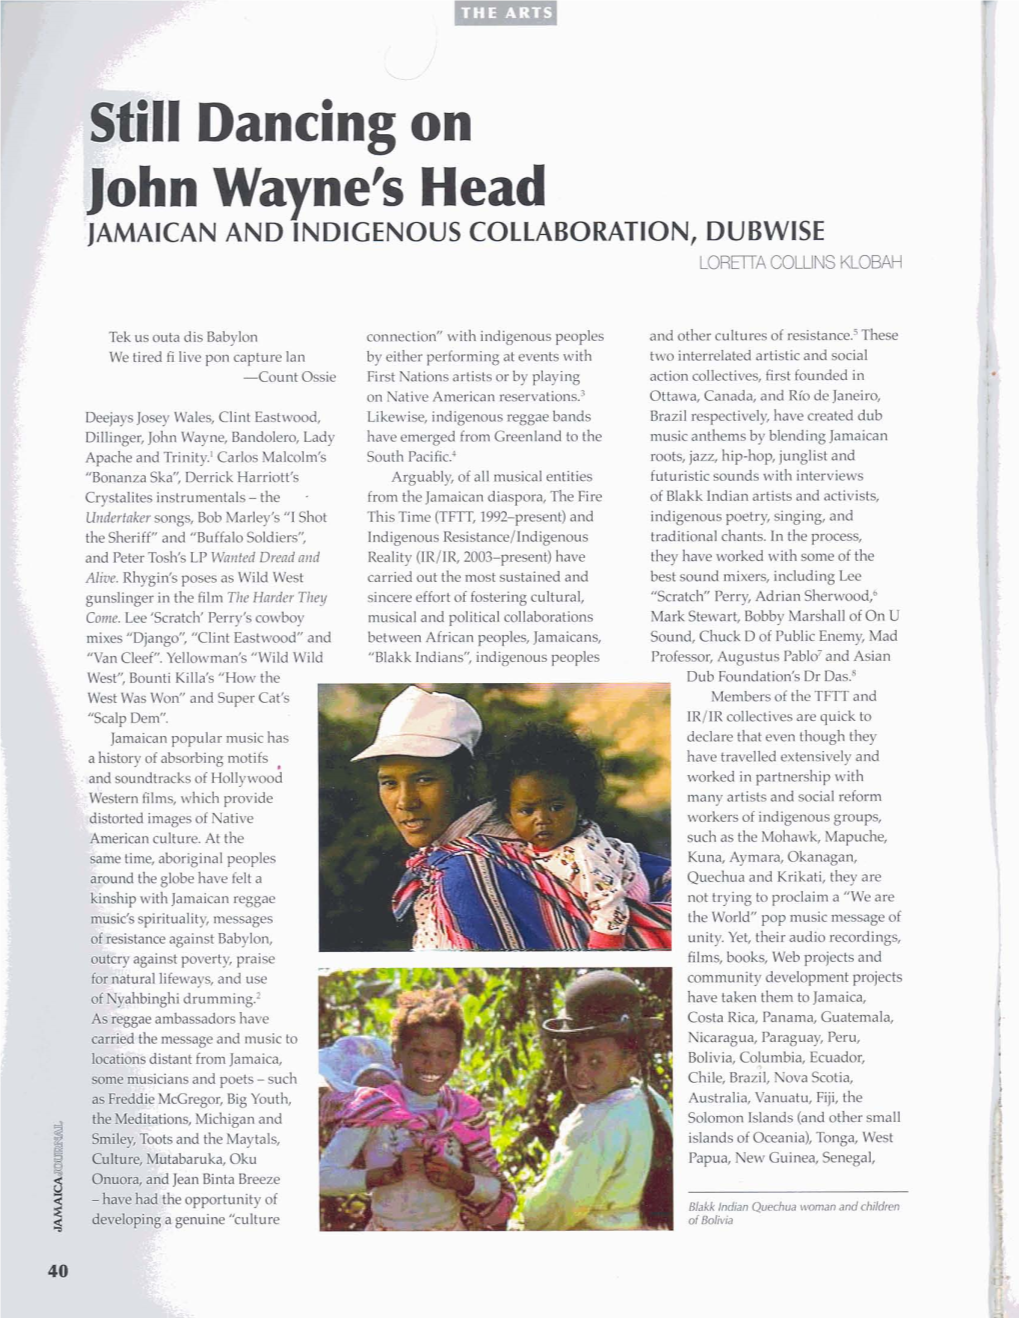 Still Dancing on John Wayne's Head: Jamaican and Indigenous